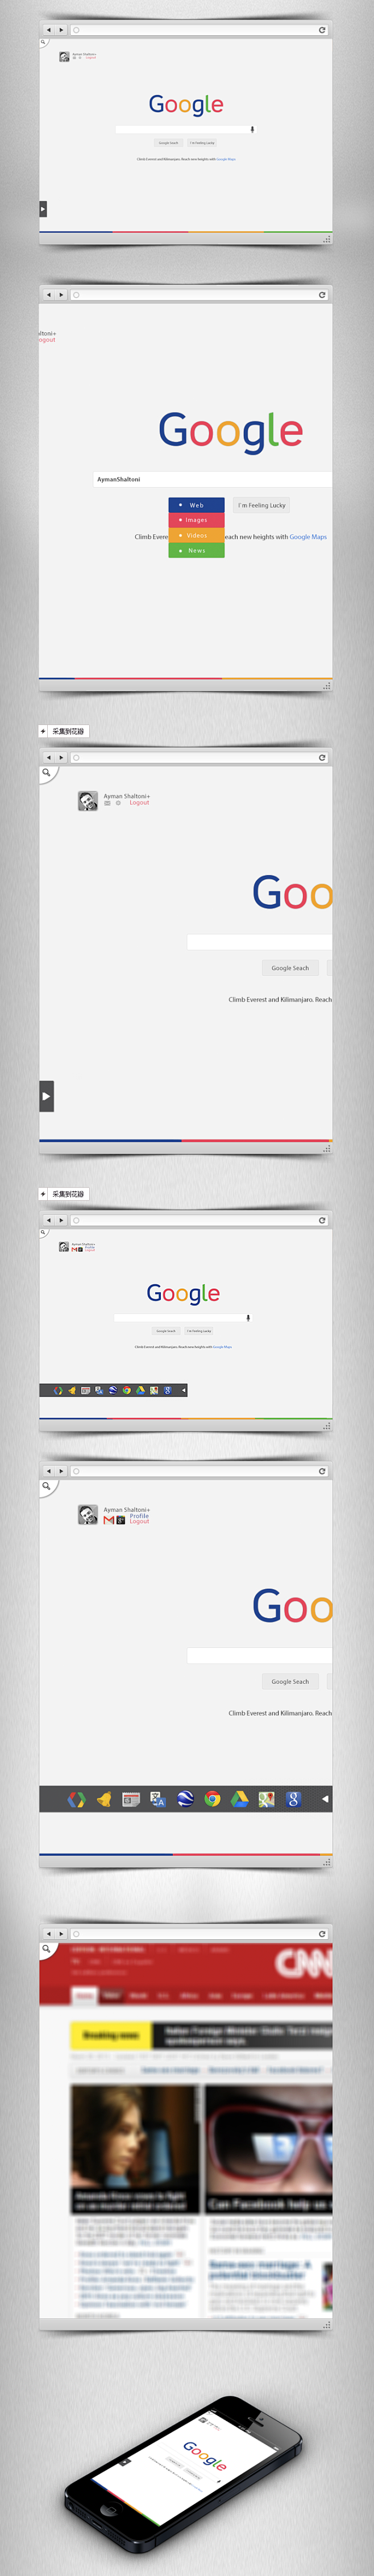 Google - Redesign Co...